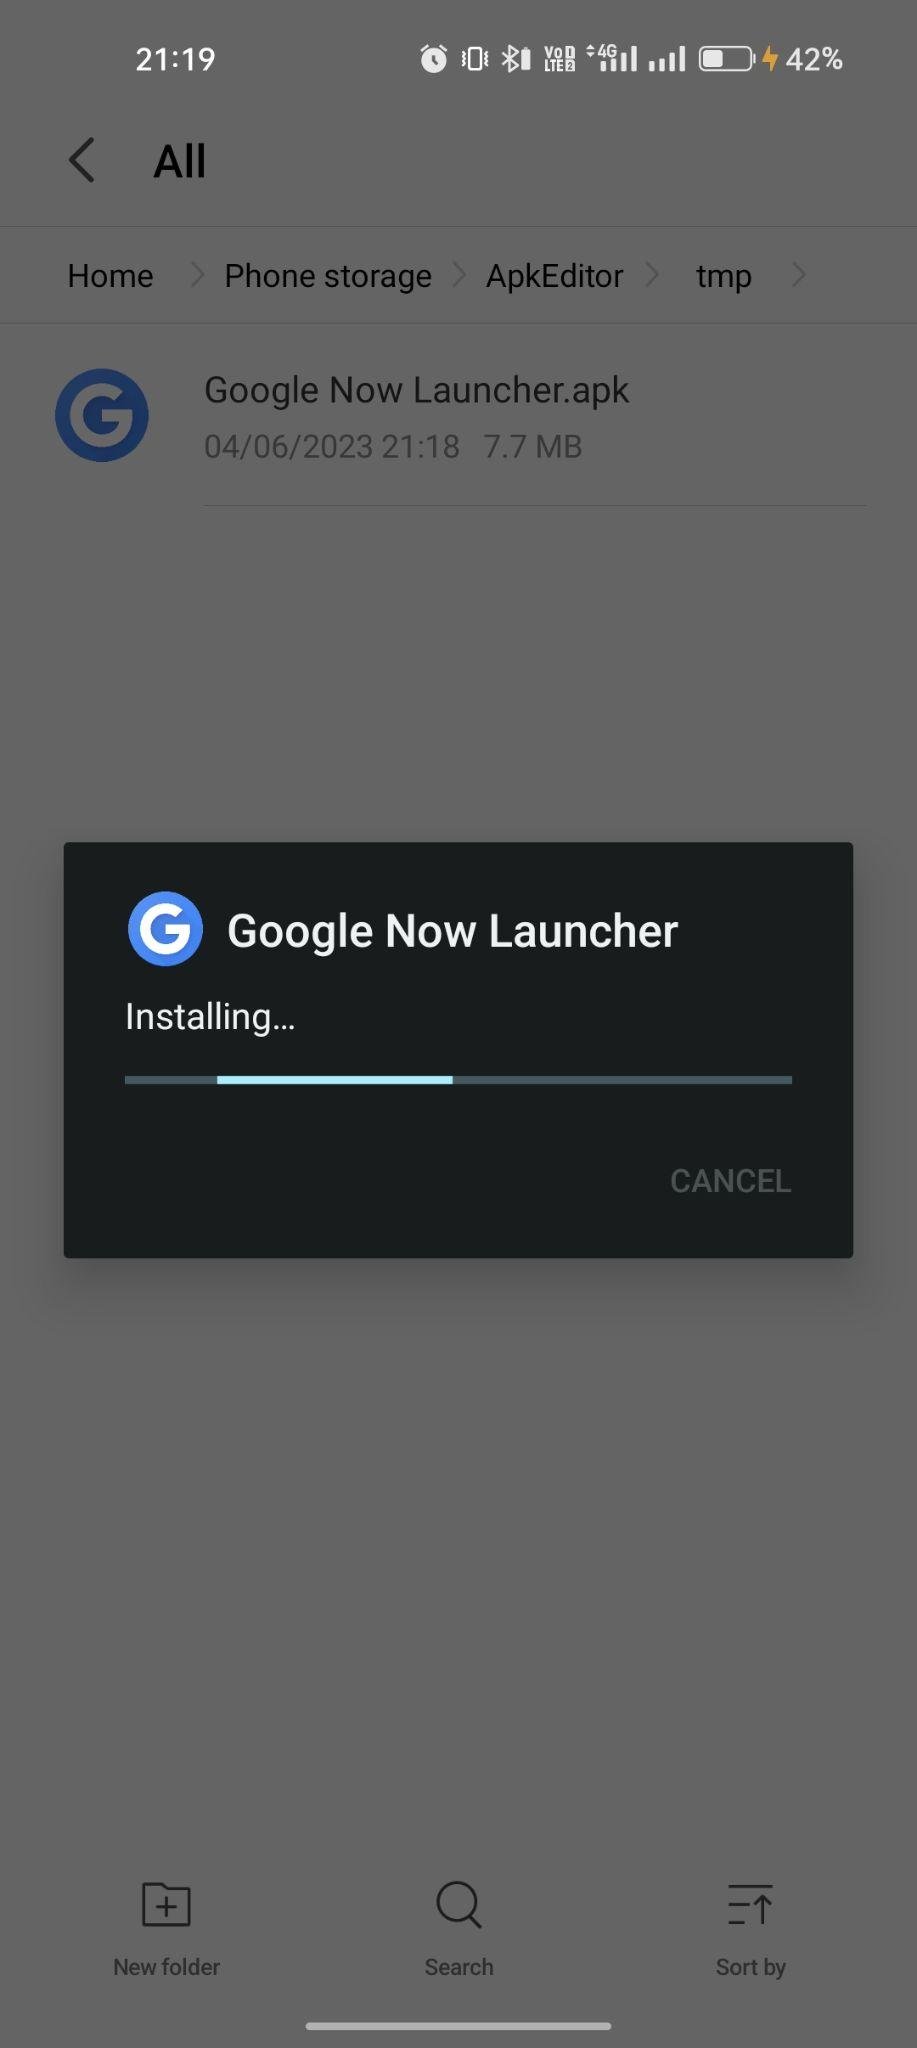 Google Now Launcher apk installing